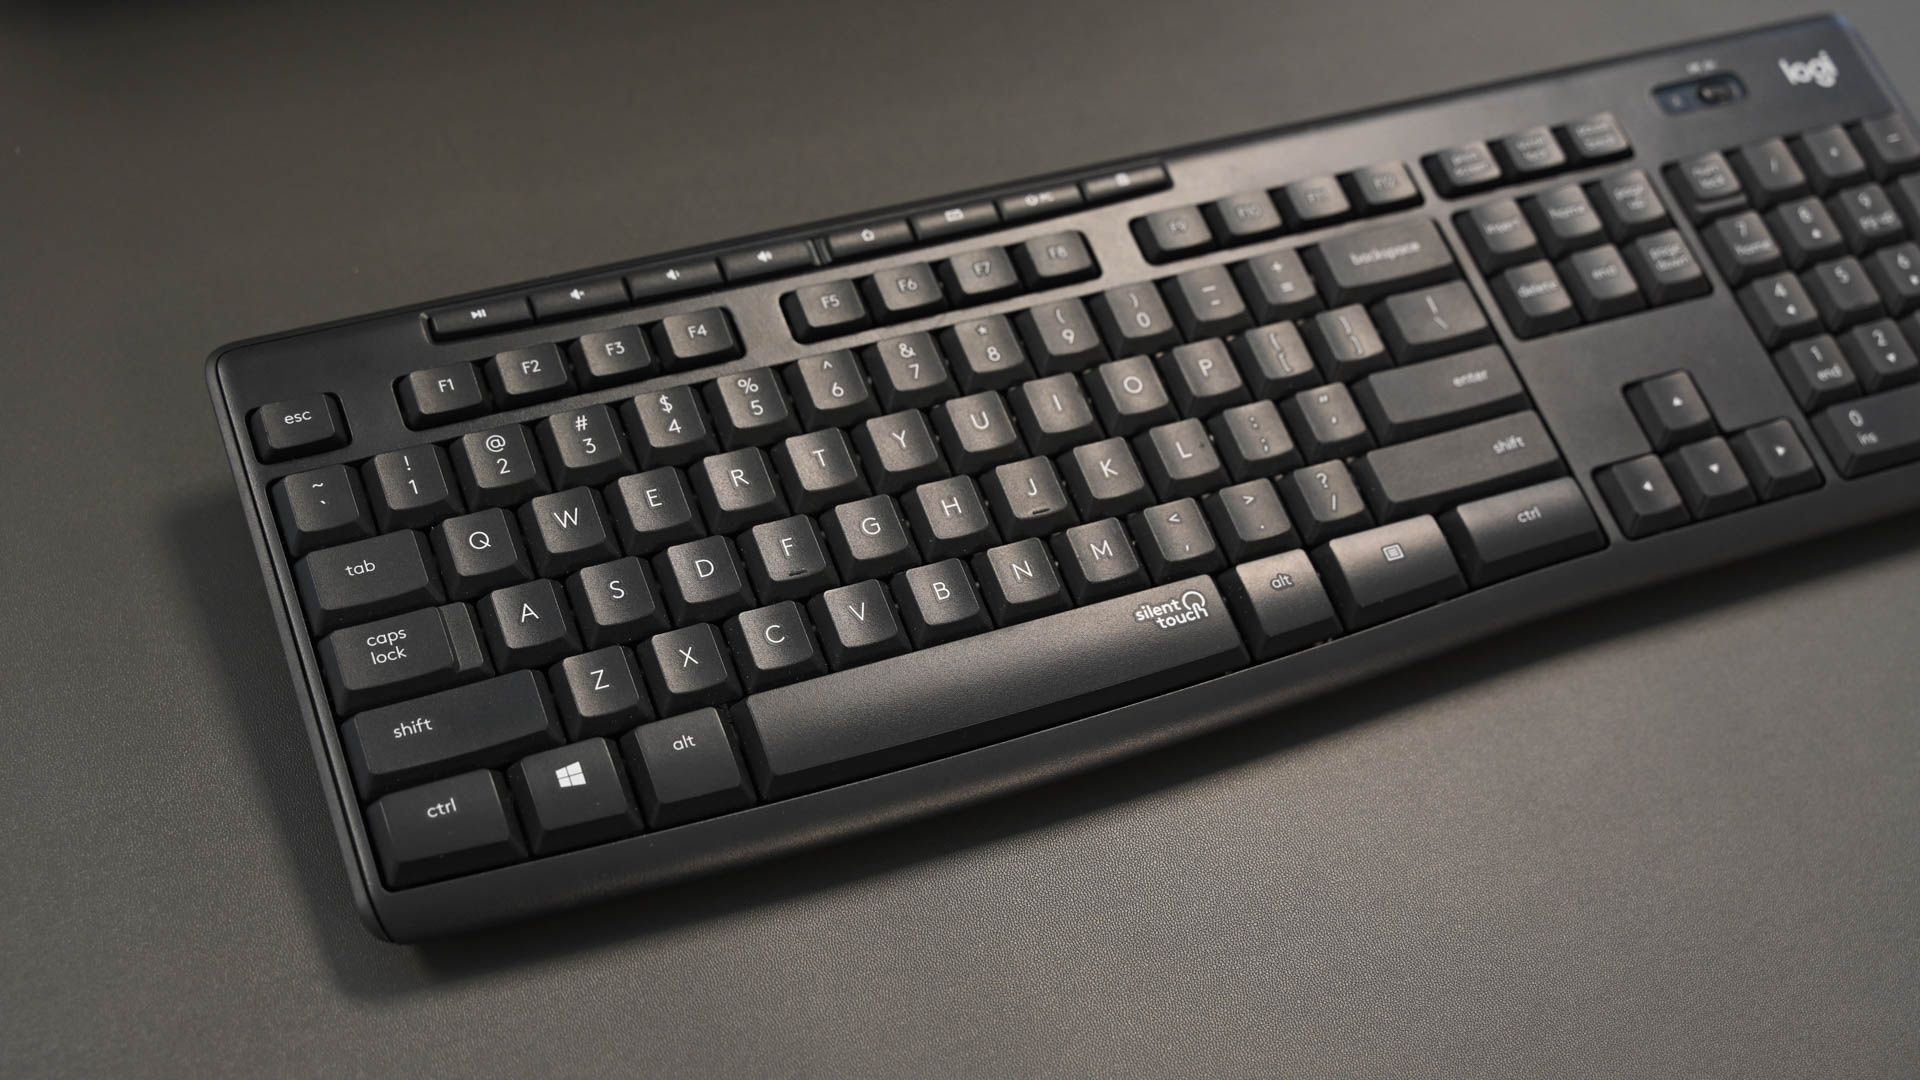 A standard Logi keyboard on a desk